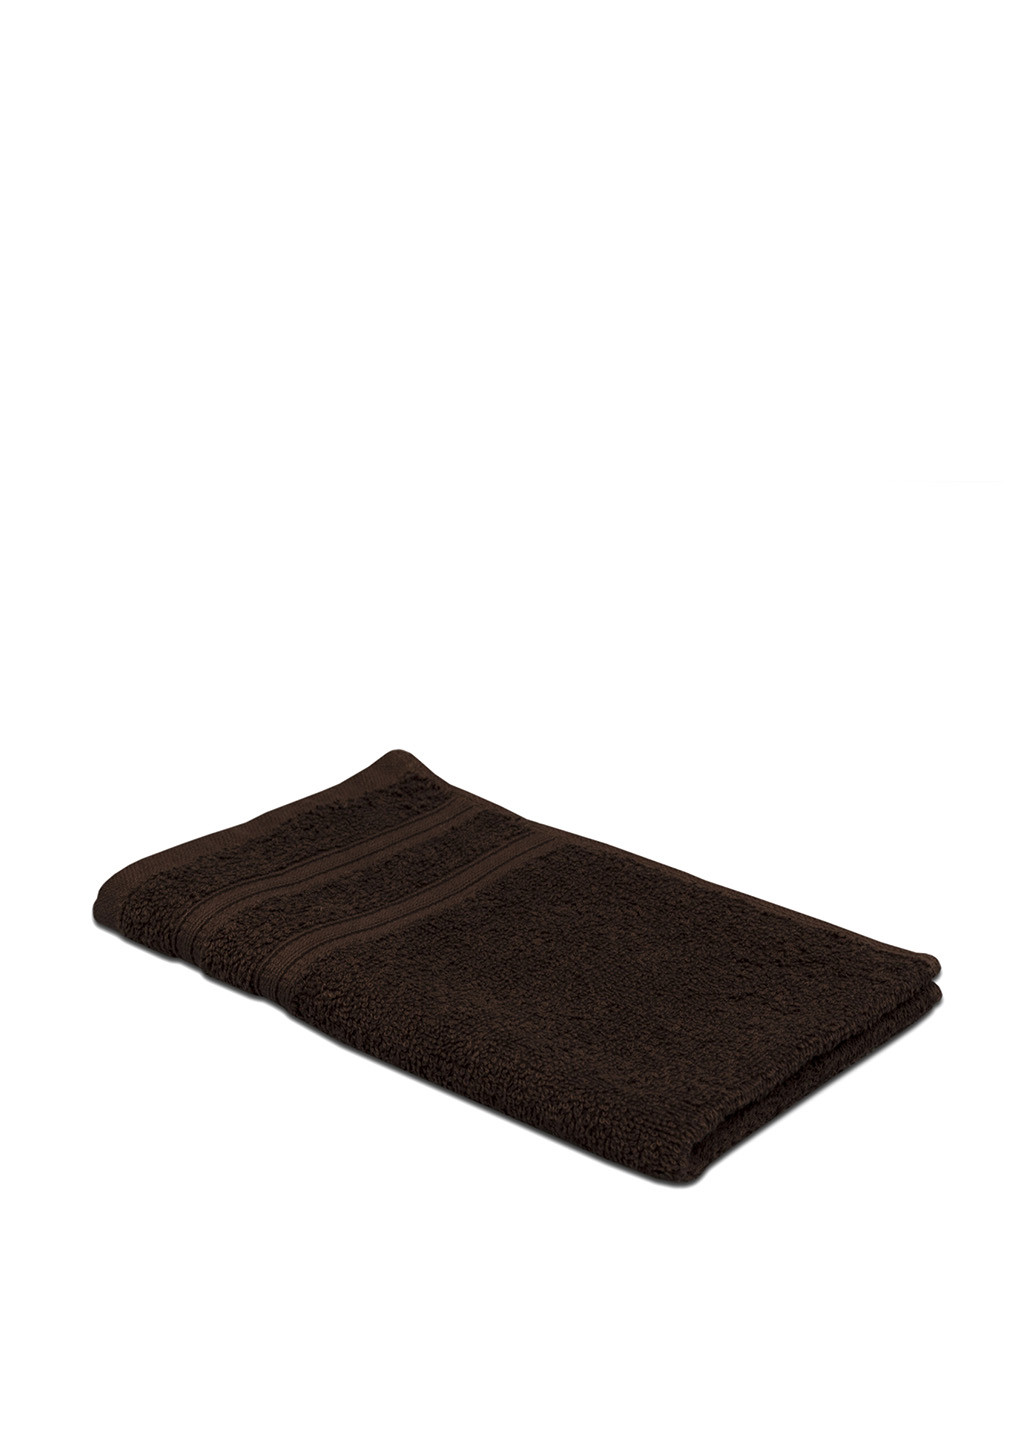 No Brand полотенце, 30х45 см однотонный темно-коричневый производство - Индия